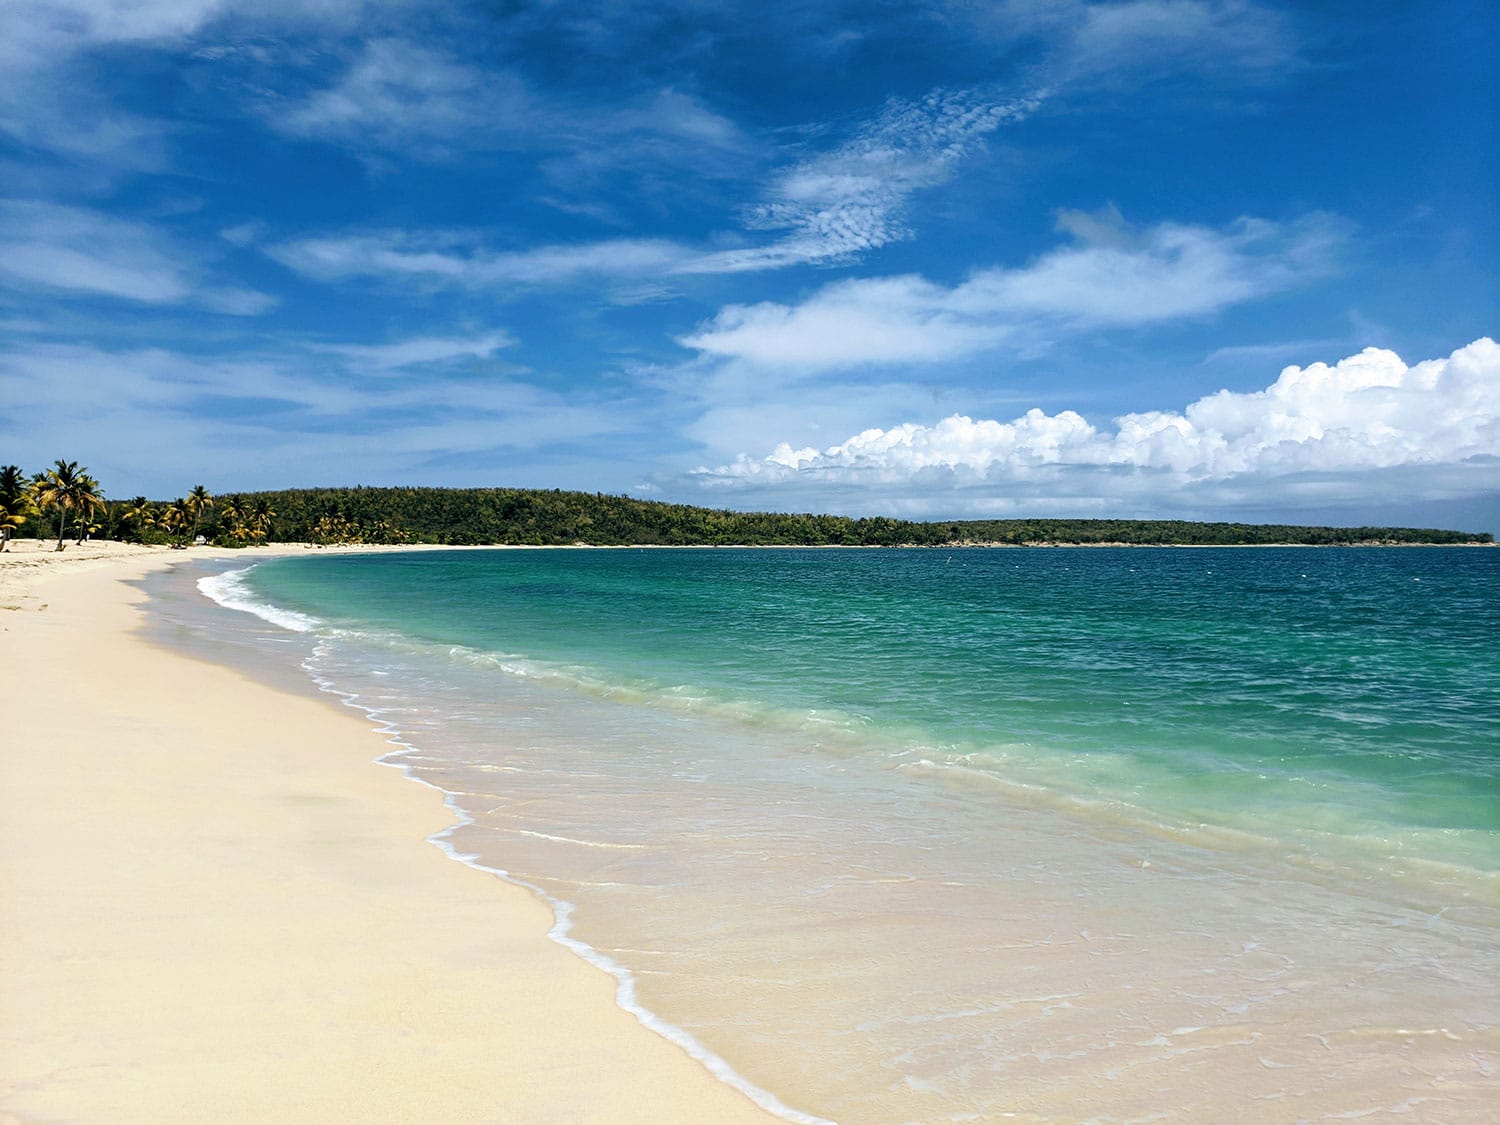 A beach coastline in the Caribbean.